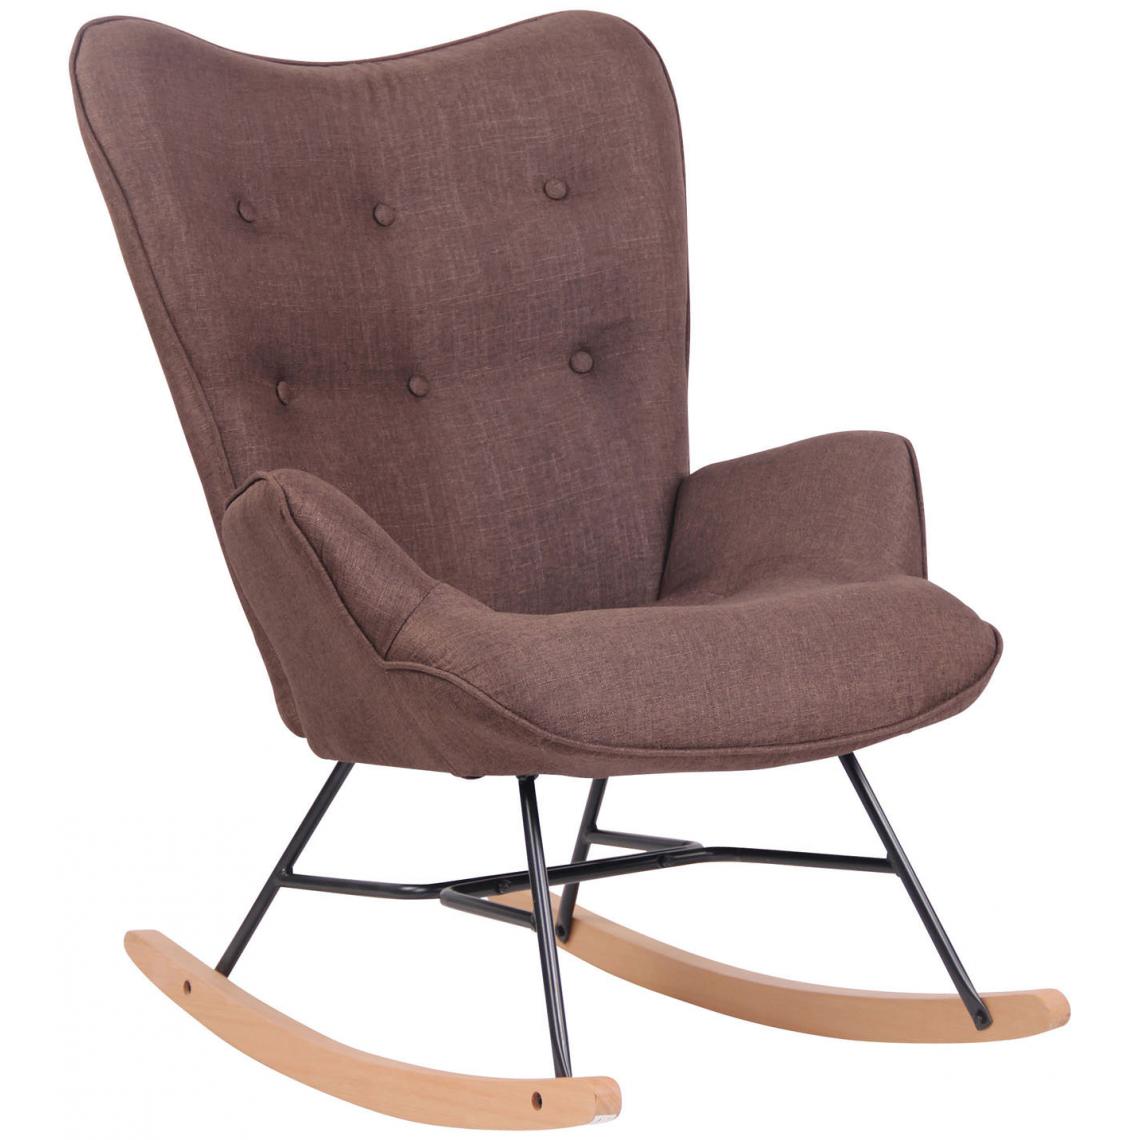 Icaverne - Splendide Chaise en tissu reference Addis-Abeba couleur marron - Chaises